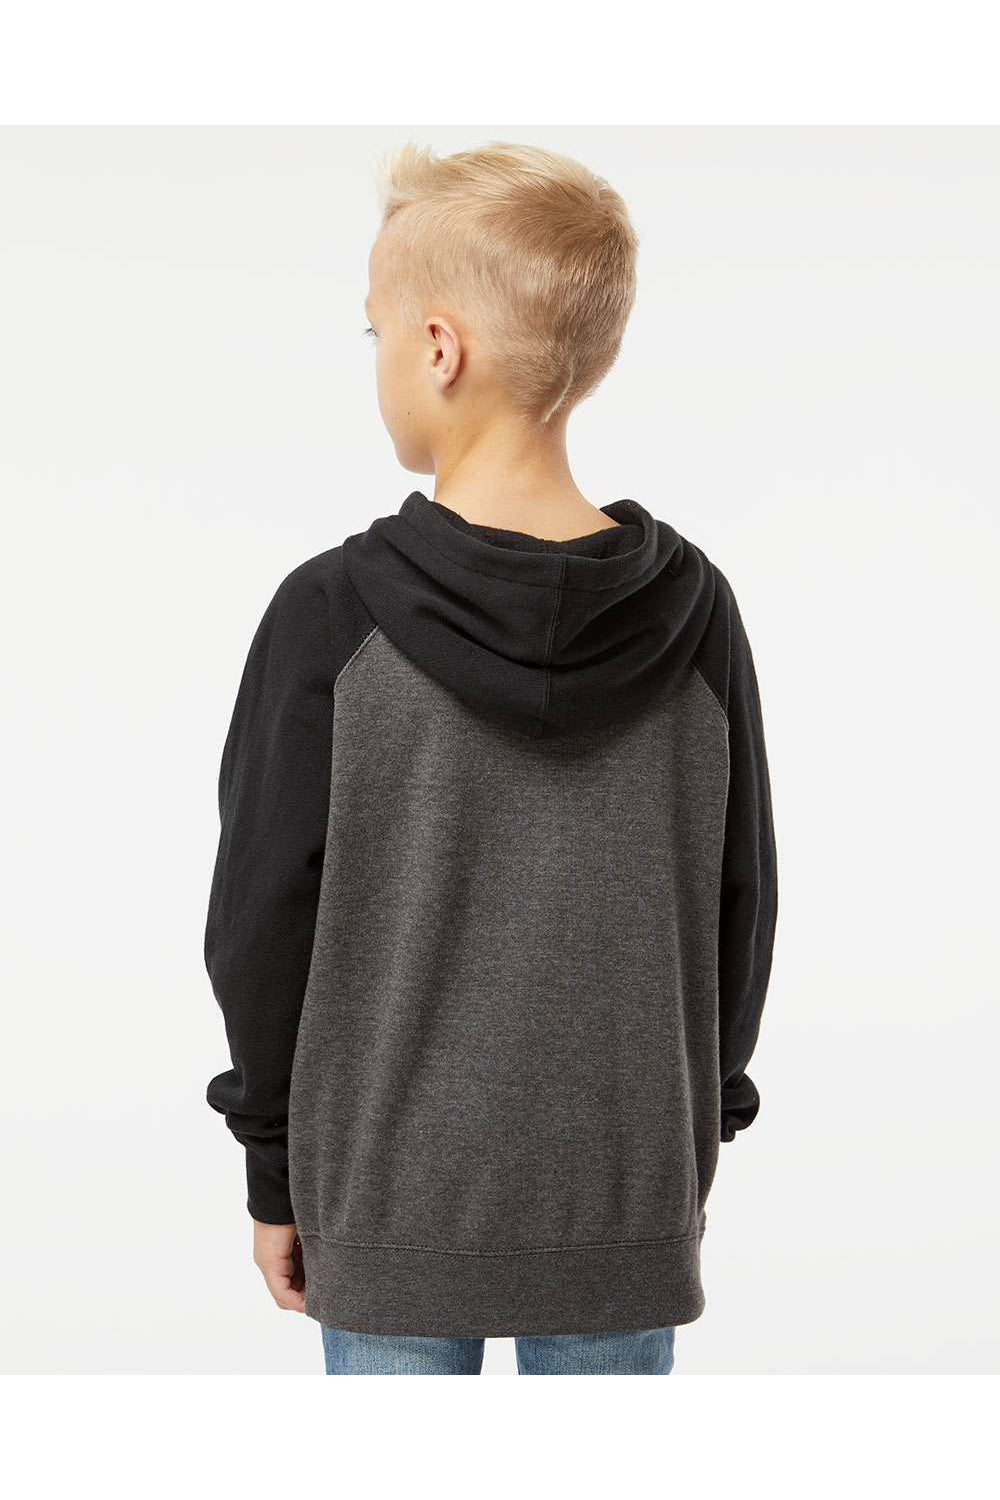 Independent Trading Co. PRM15YSB Youth Special Blend Raglan Hooded Sweatshirt Hoodie Carbon Grey/Black Model Back